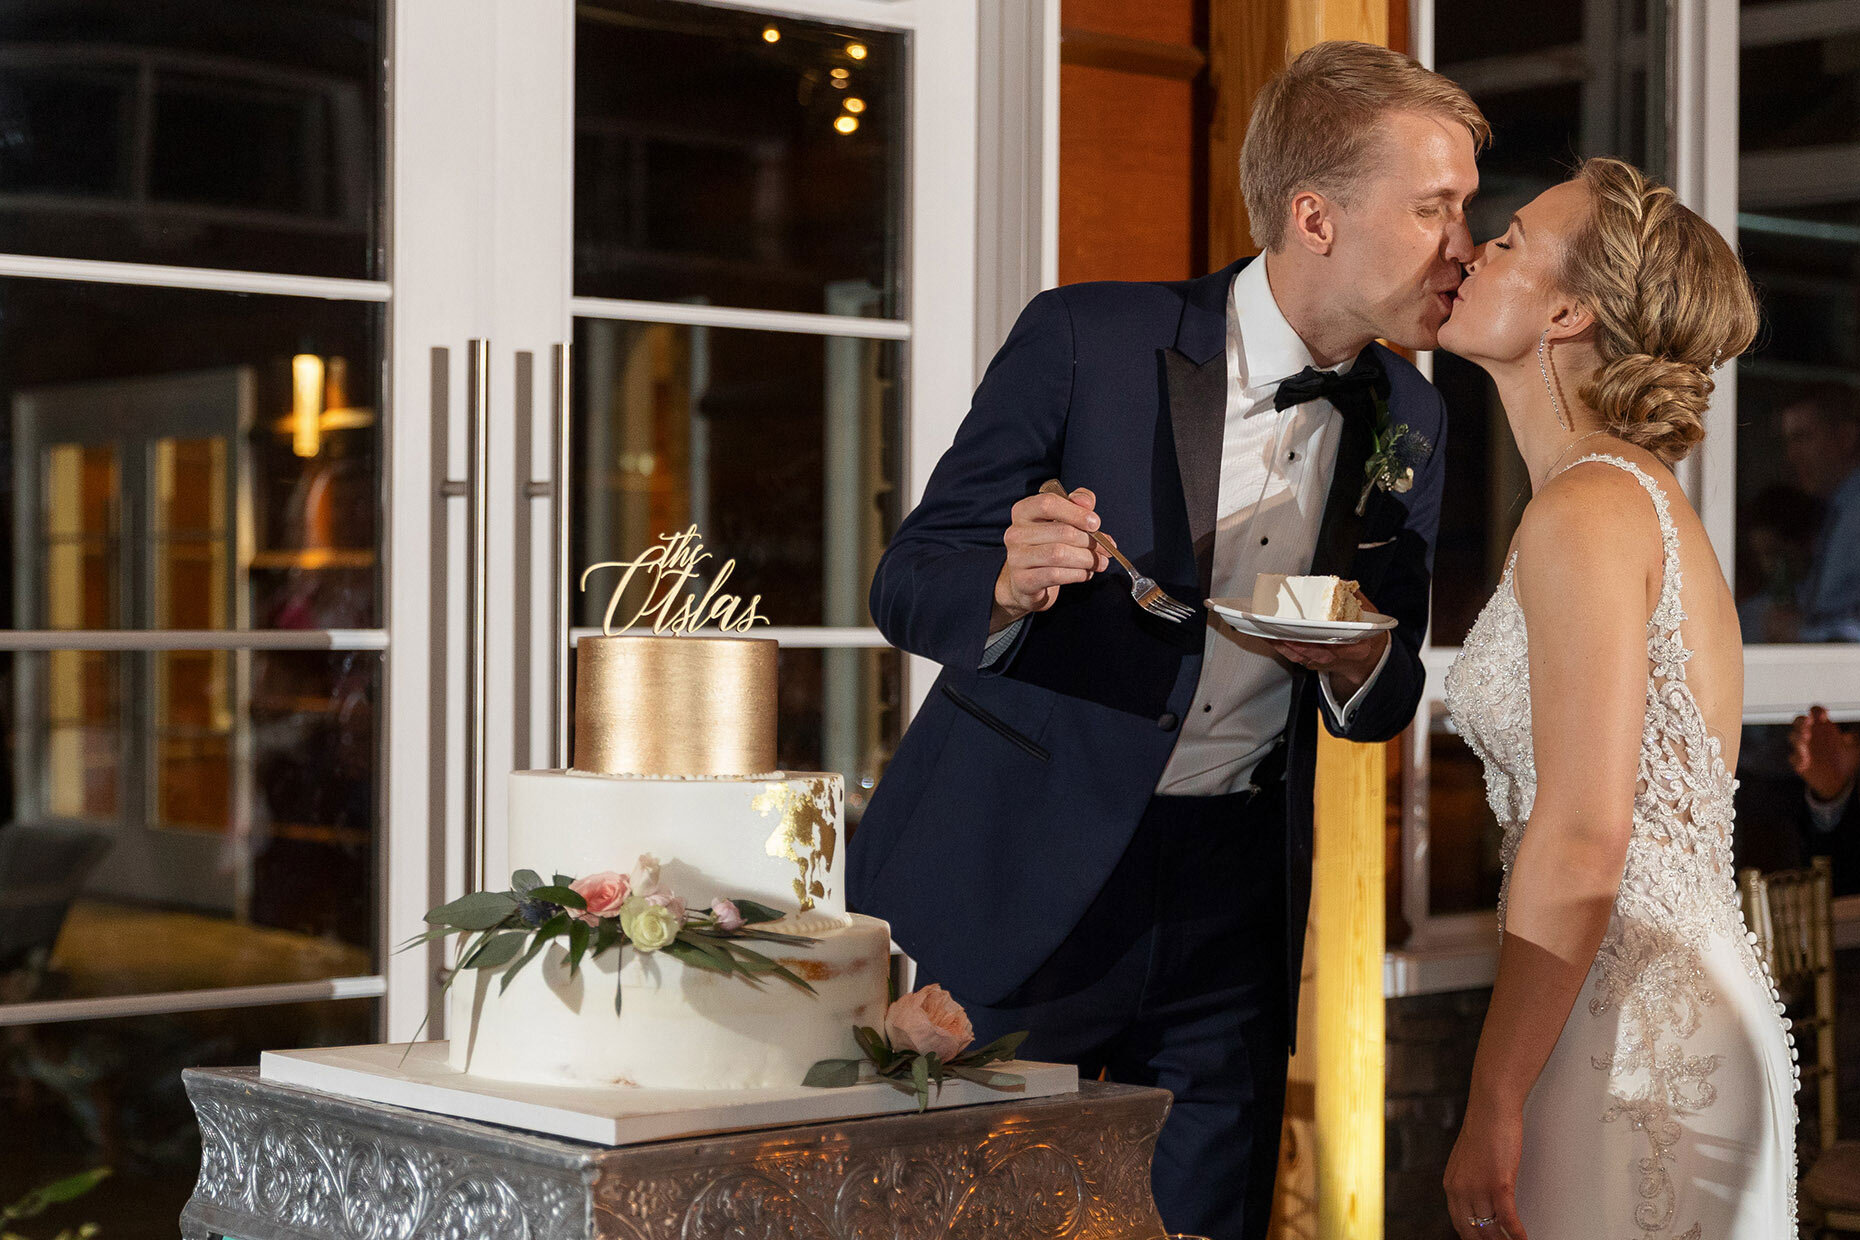 Cake cutting at reception - kiss